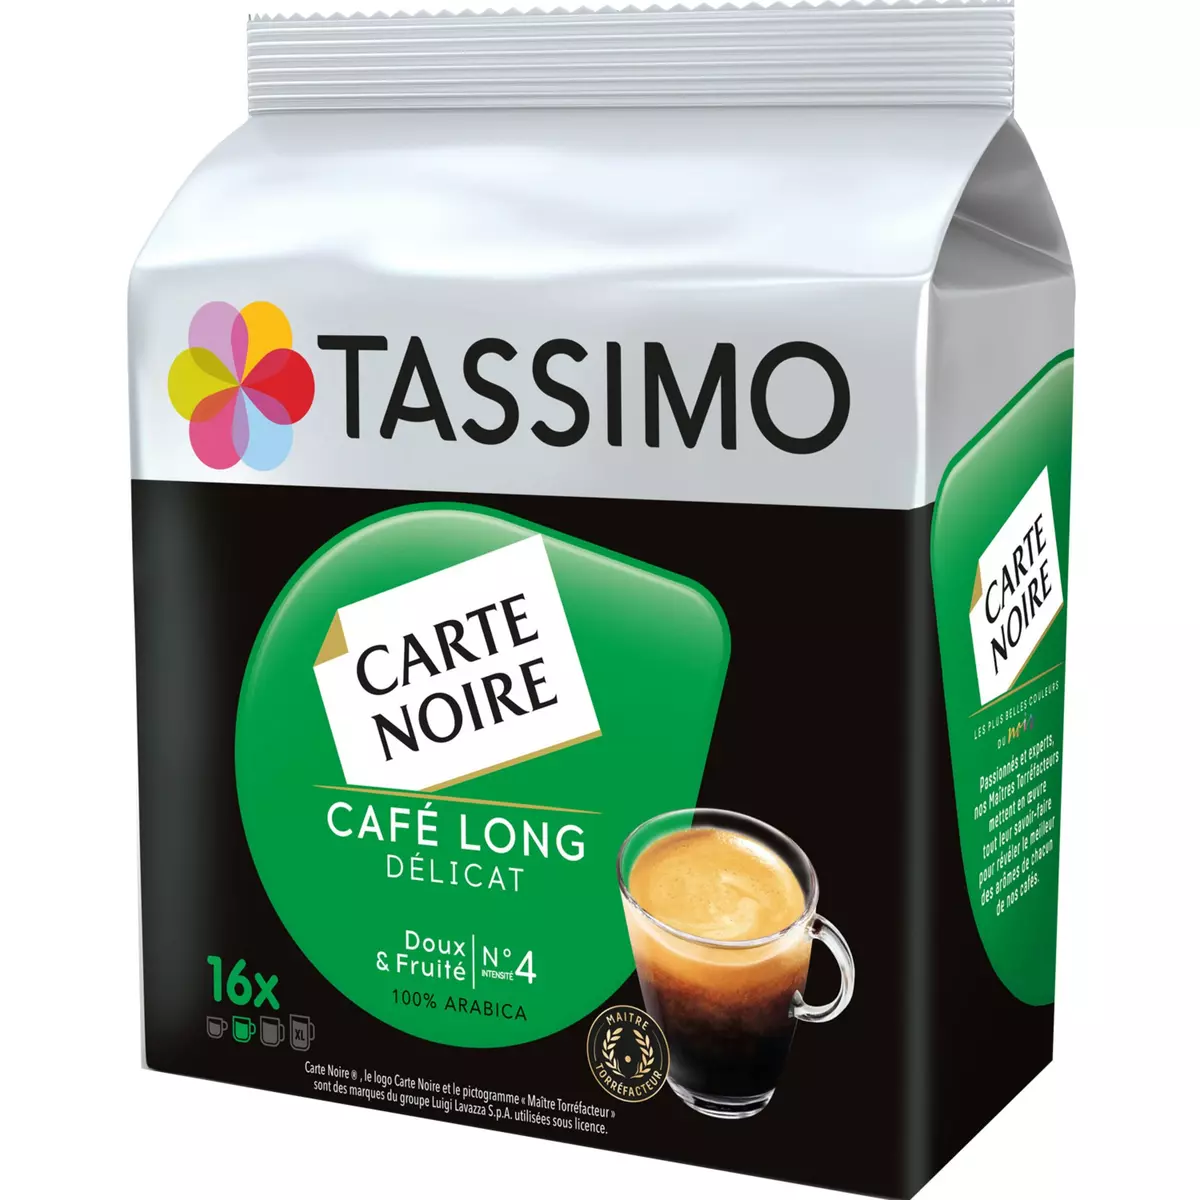 TASSIMO L'Or dosettes de café long intense 208g 2x16 dosettes pas